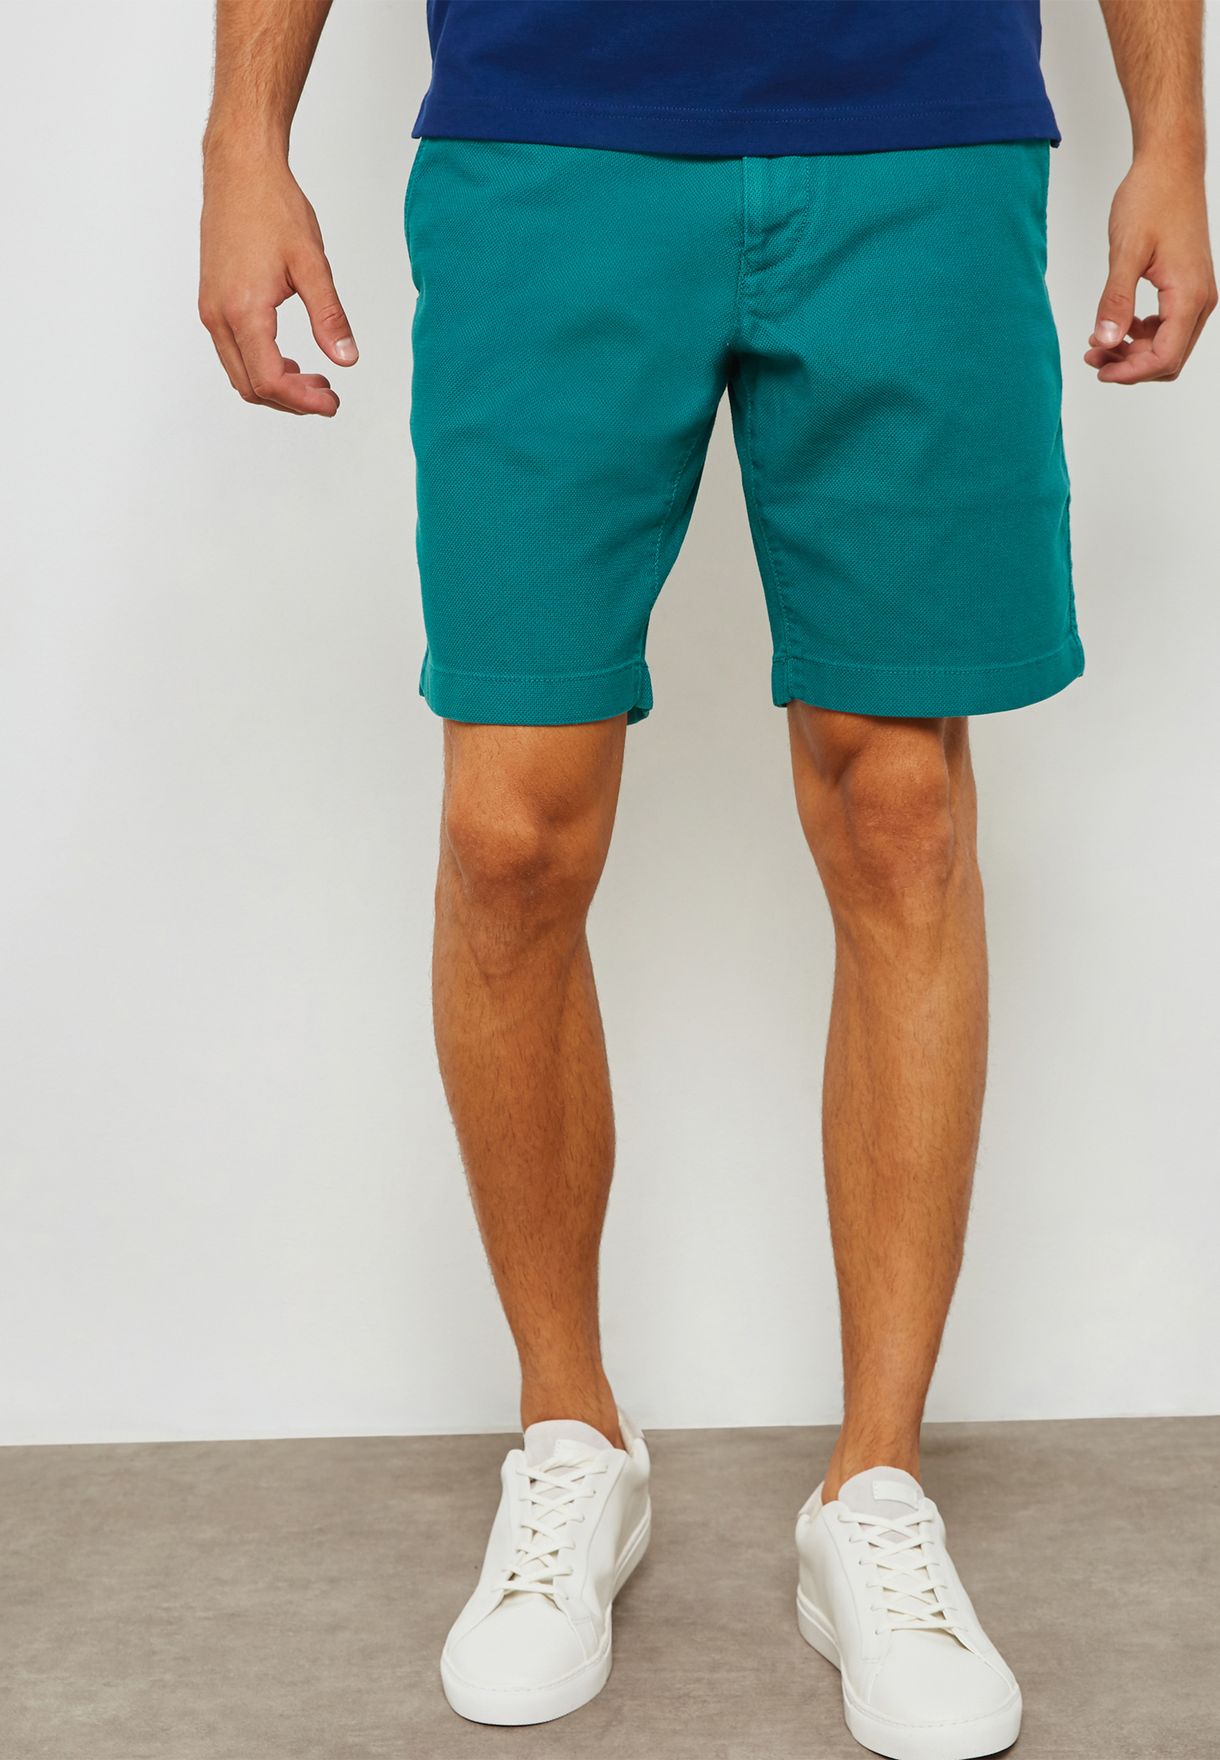 tommy hilfiger green shorts